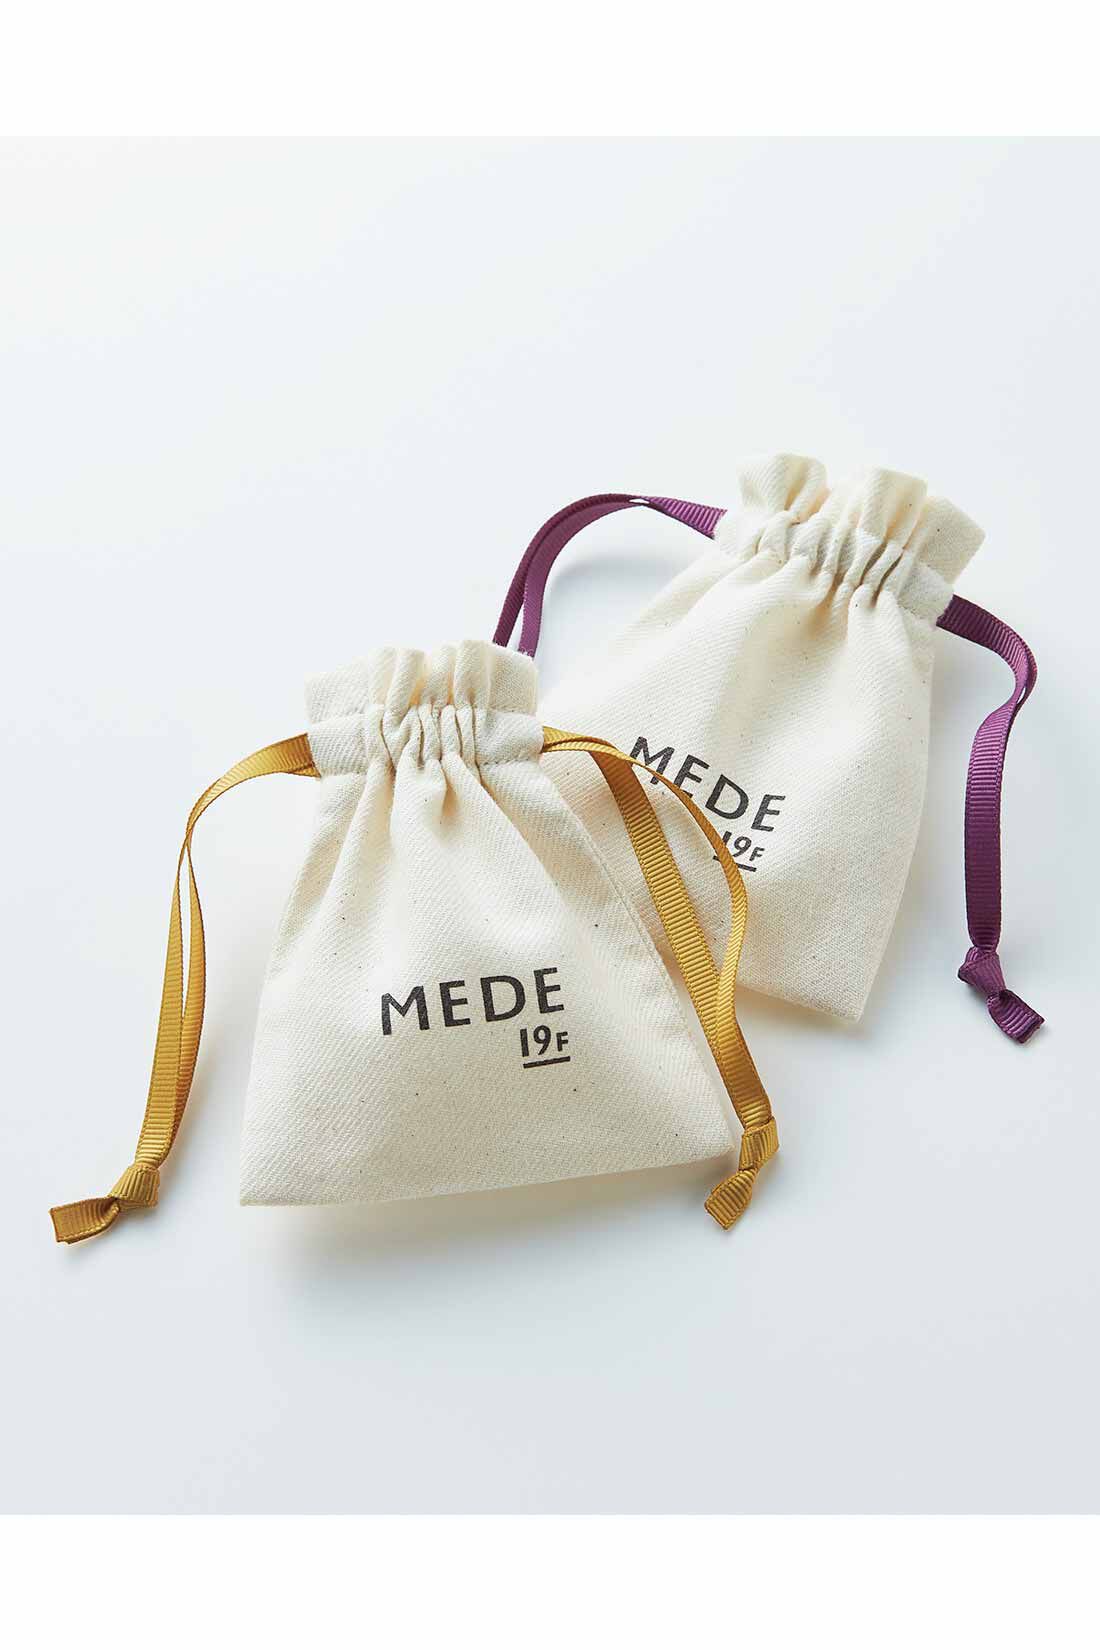 MEDE19F|YPAC for MEDE19F　フランス製陶器ボタンイヤリング type.22|MEDE19Fオリジナルきんちゃくに入れてお届けします。